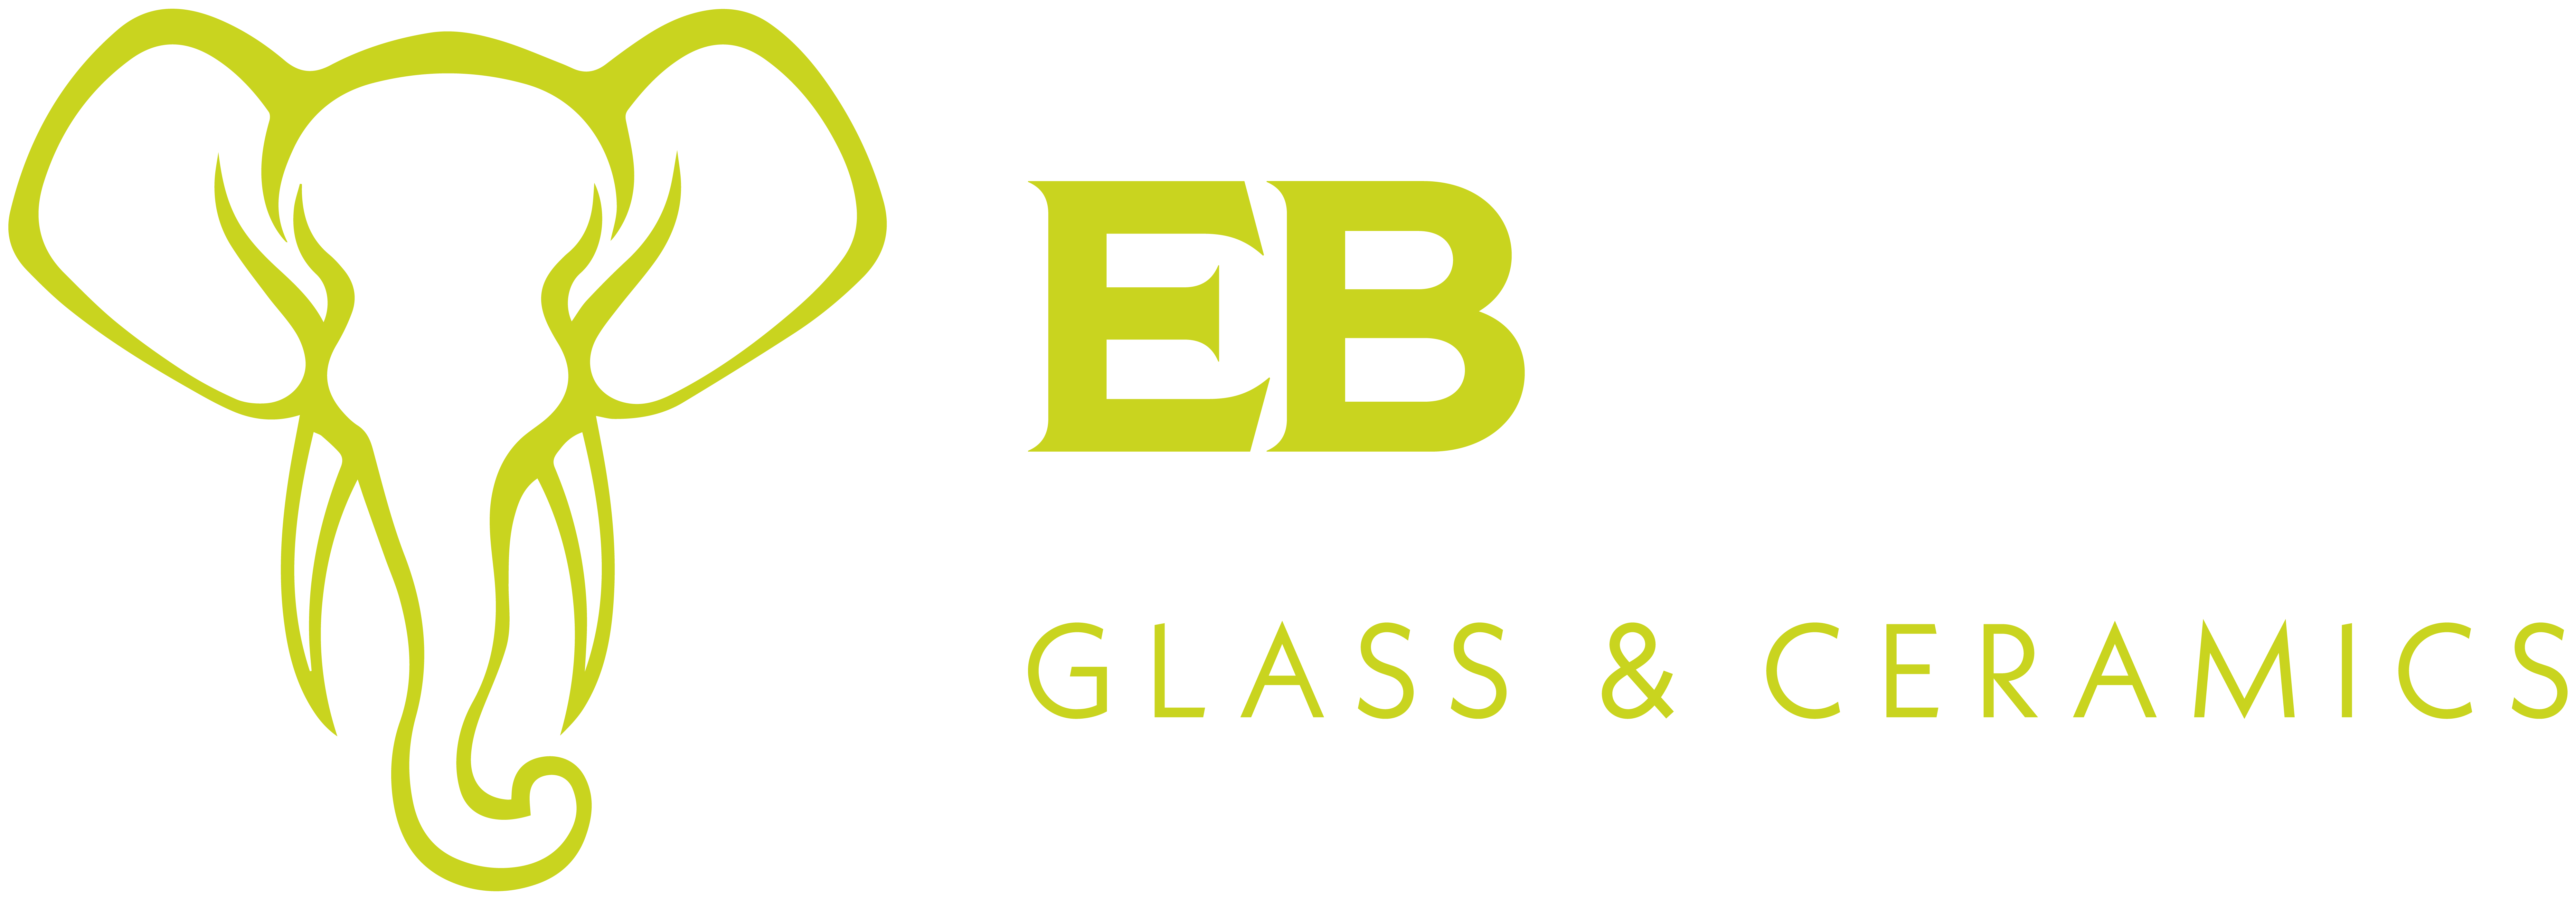 eb castings full logo white transparent-01